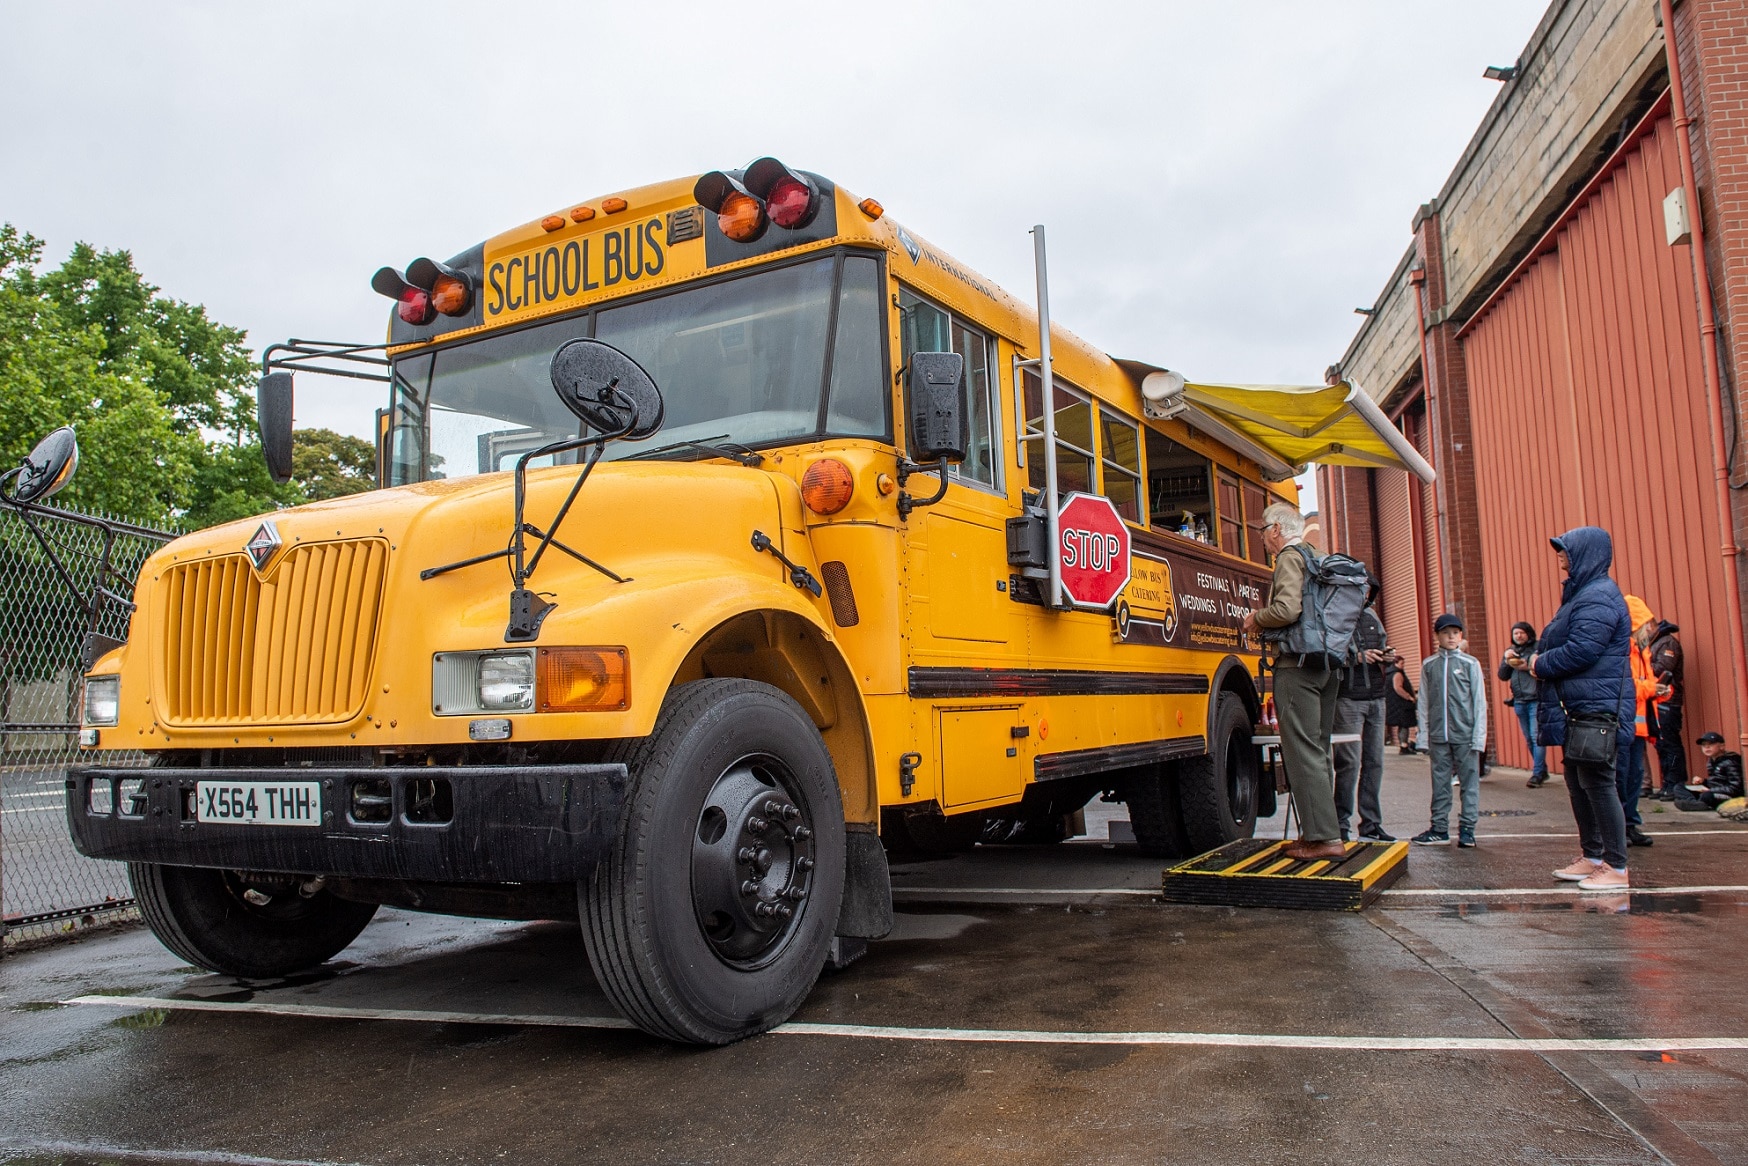 International school bus acting as a food truck